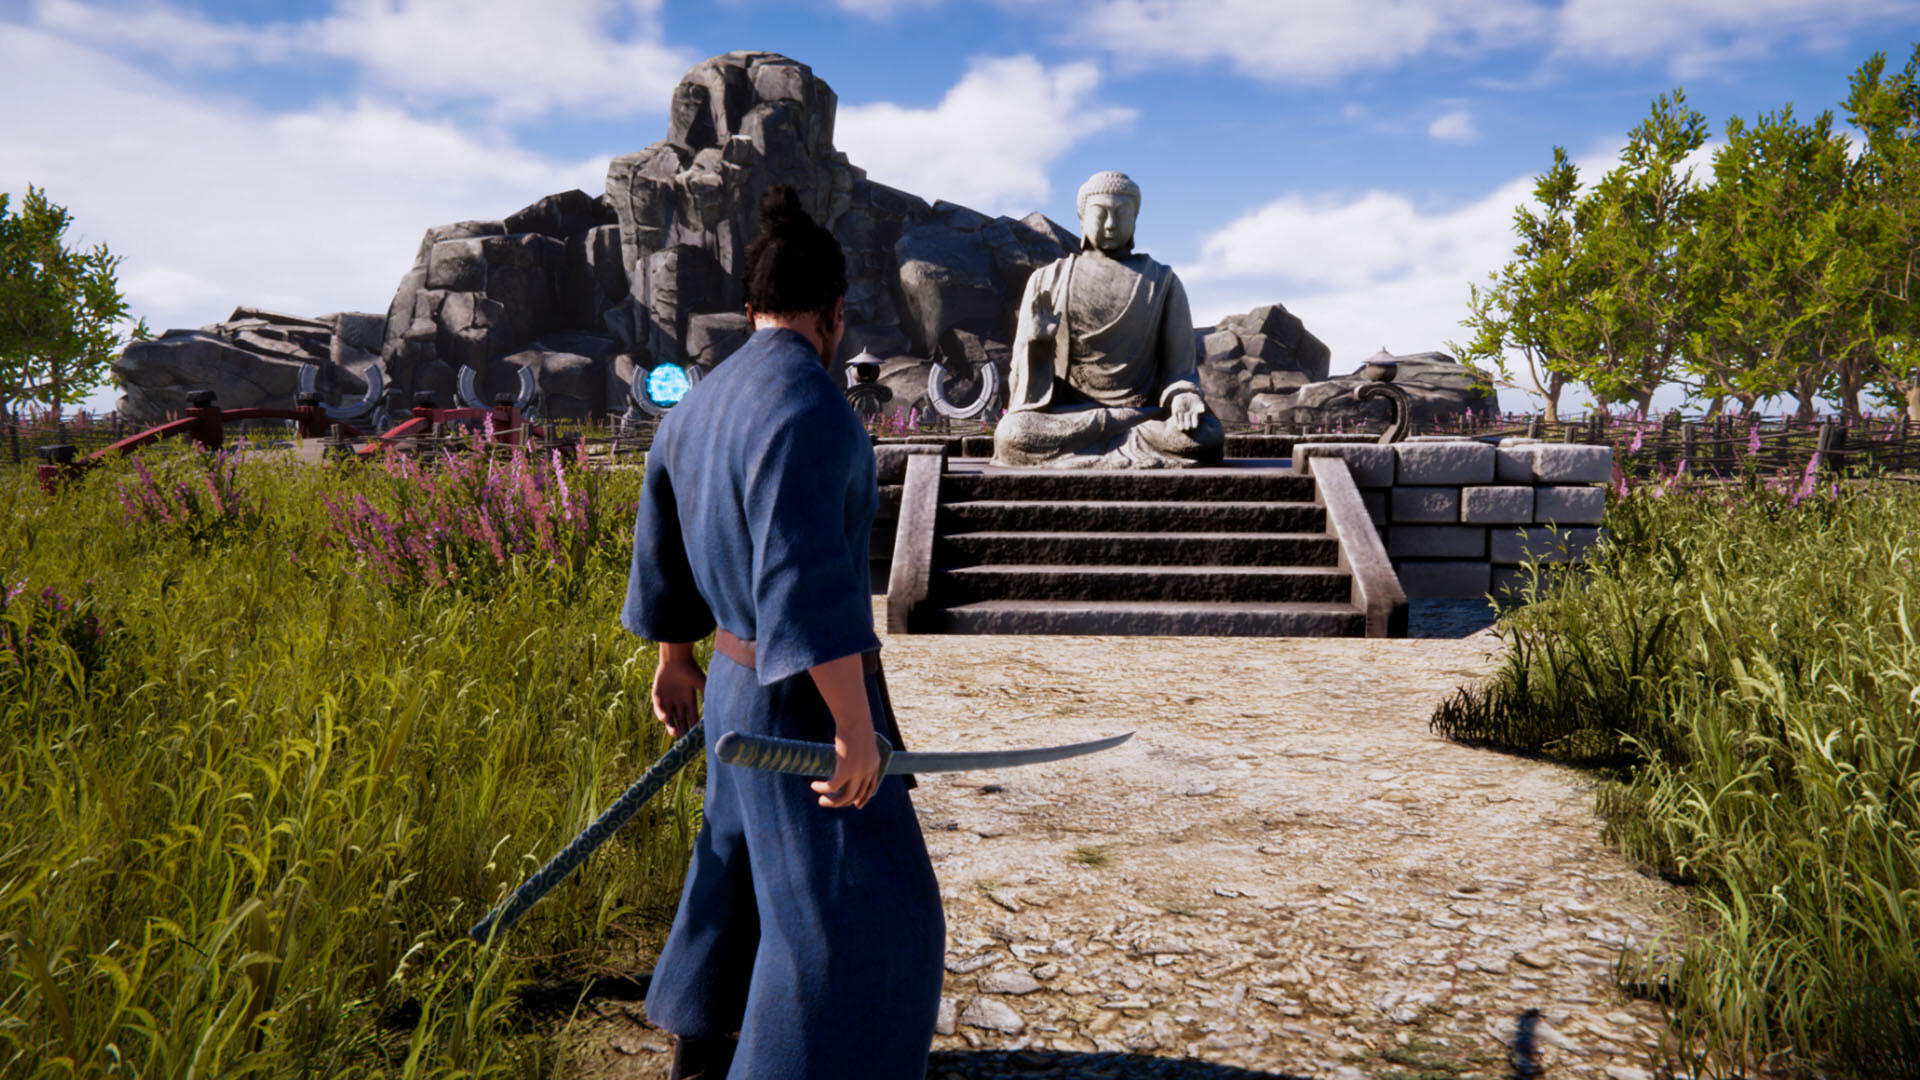 Rogue Samurai screenshot game